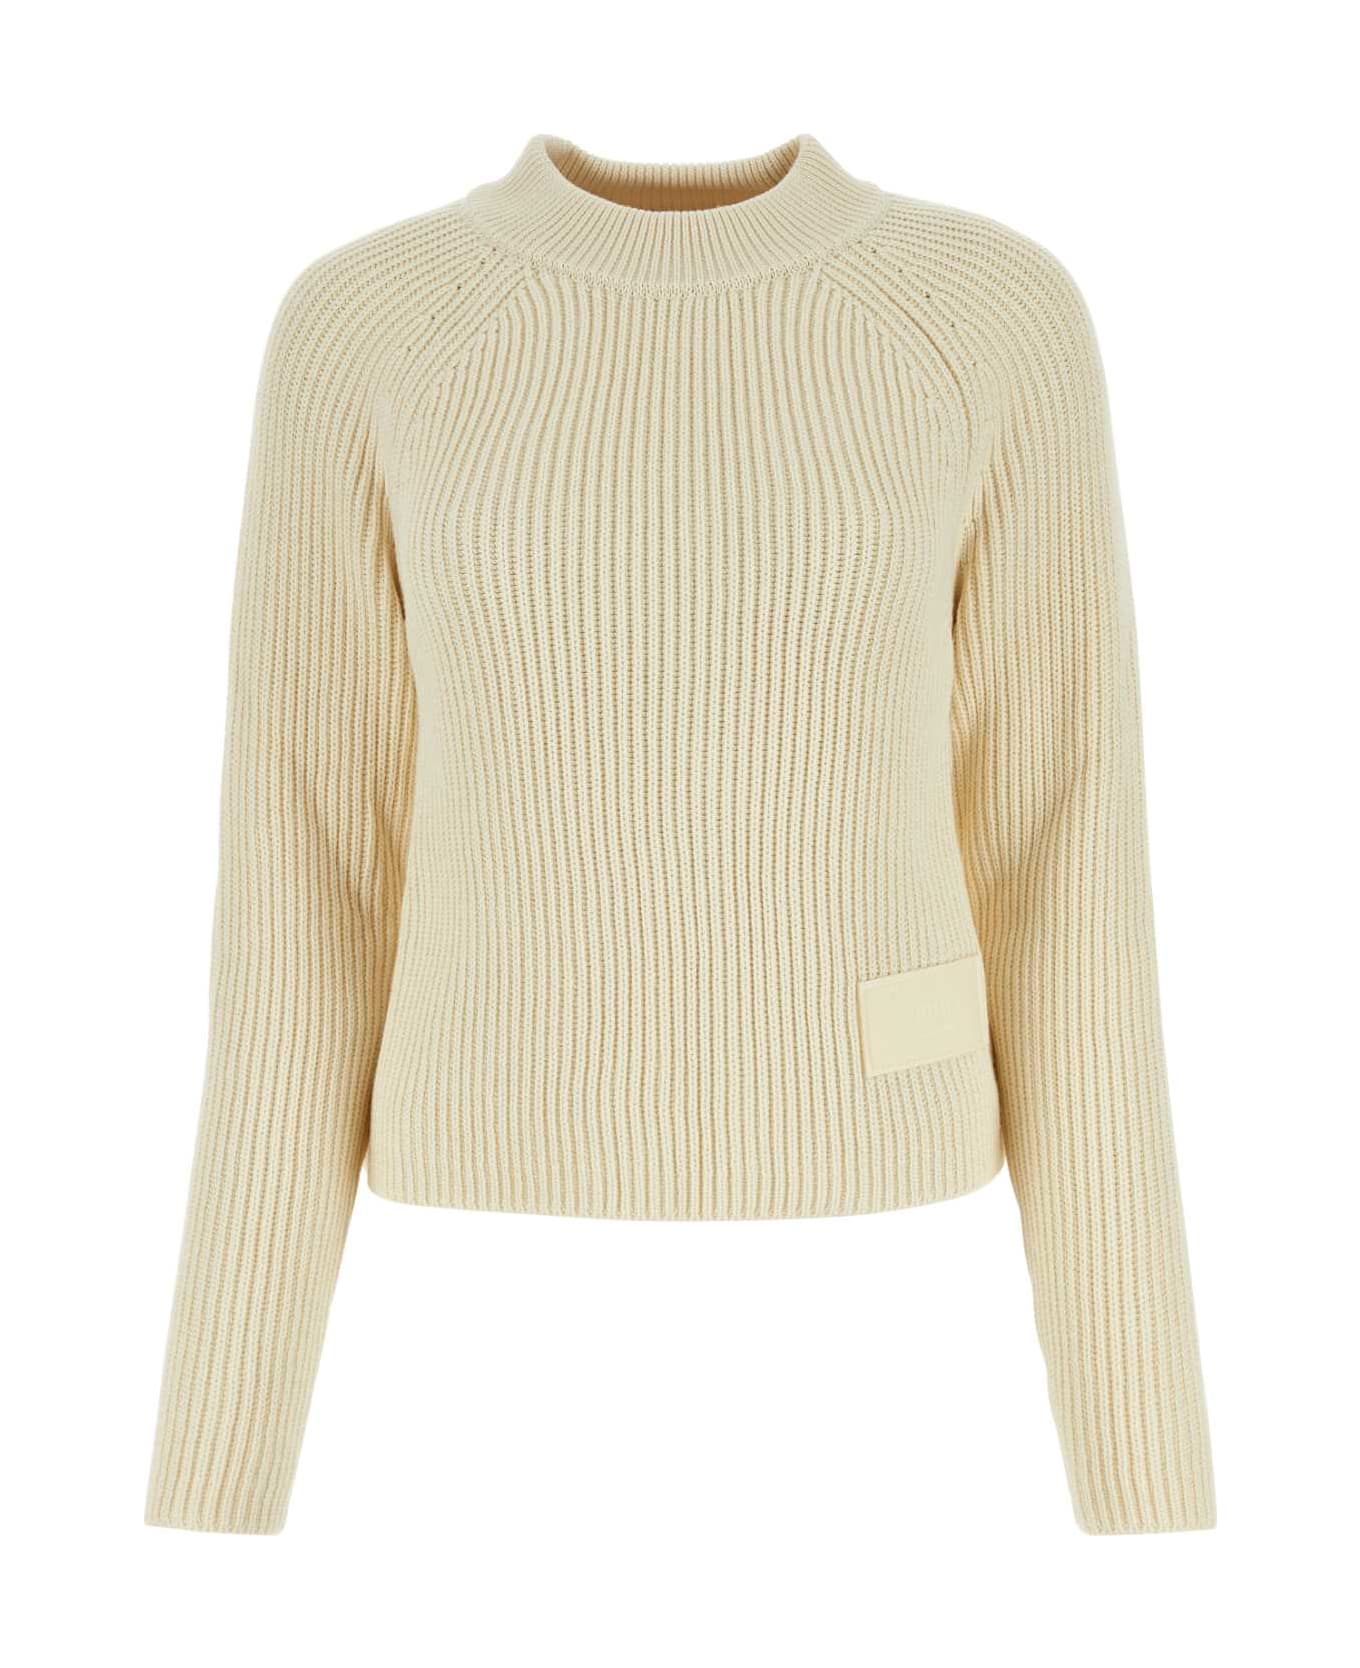 Ami Alexandre Mattiussi Ivory Cotton Blend Sweater - IVORY